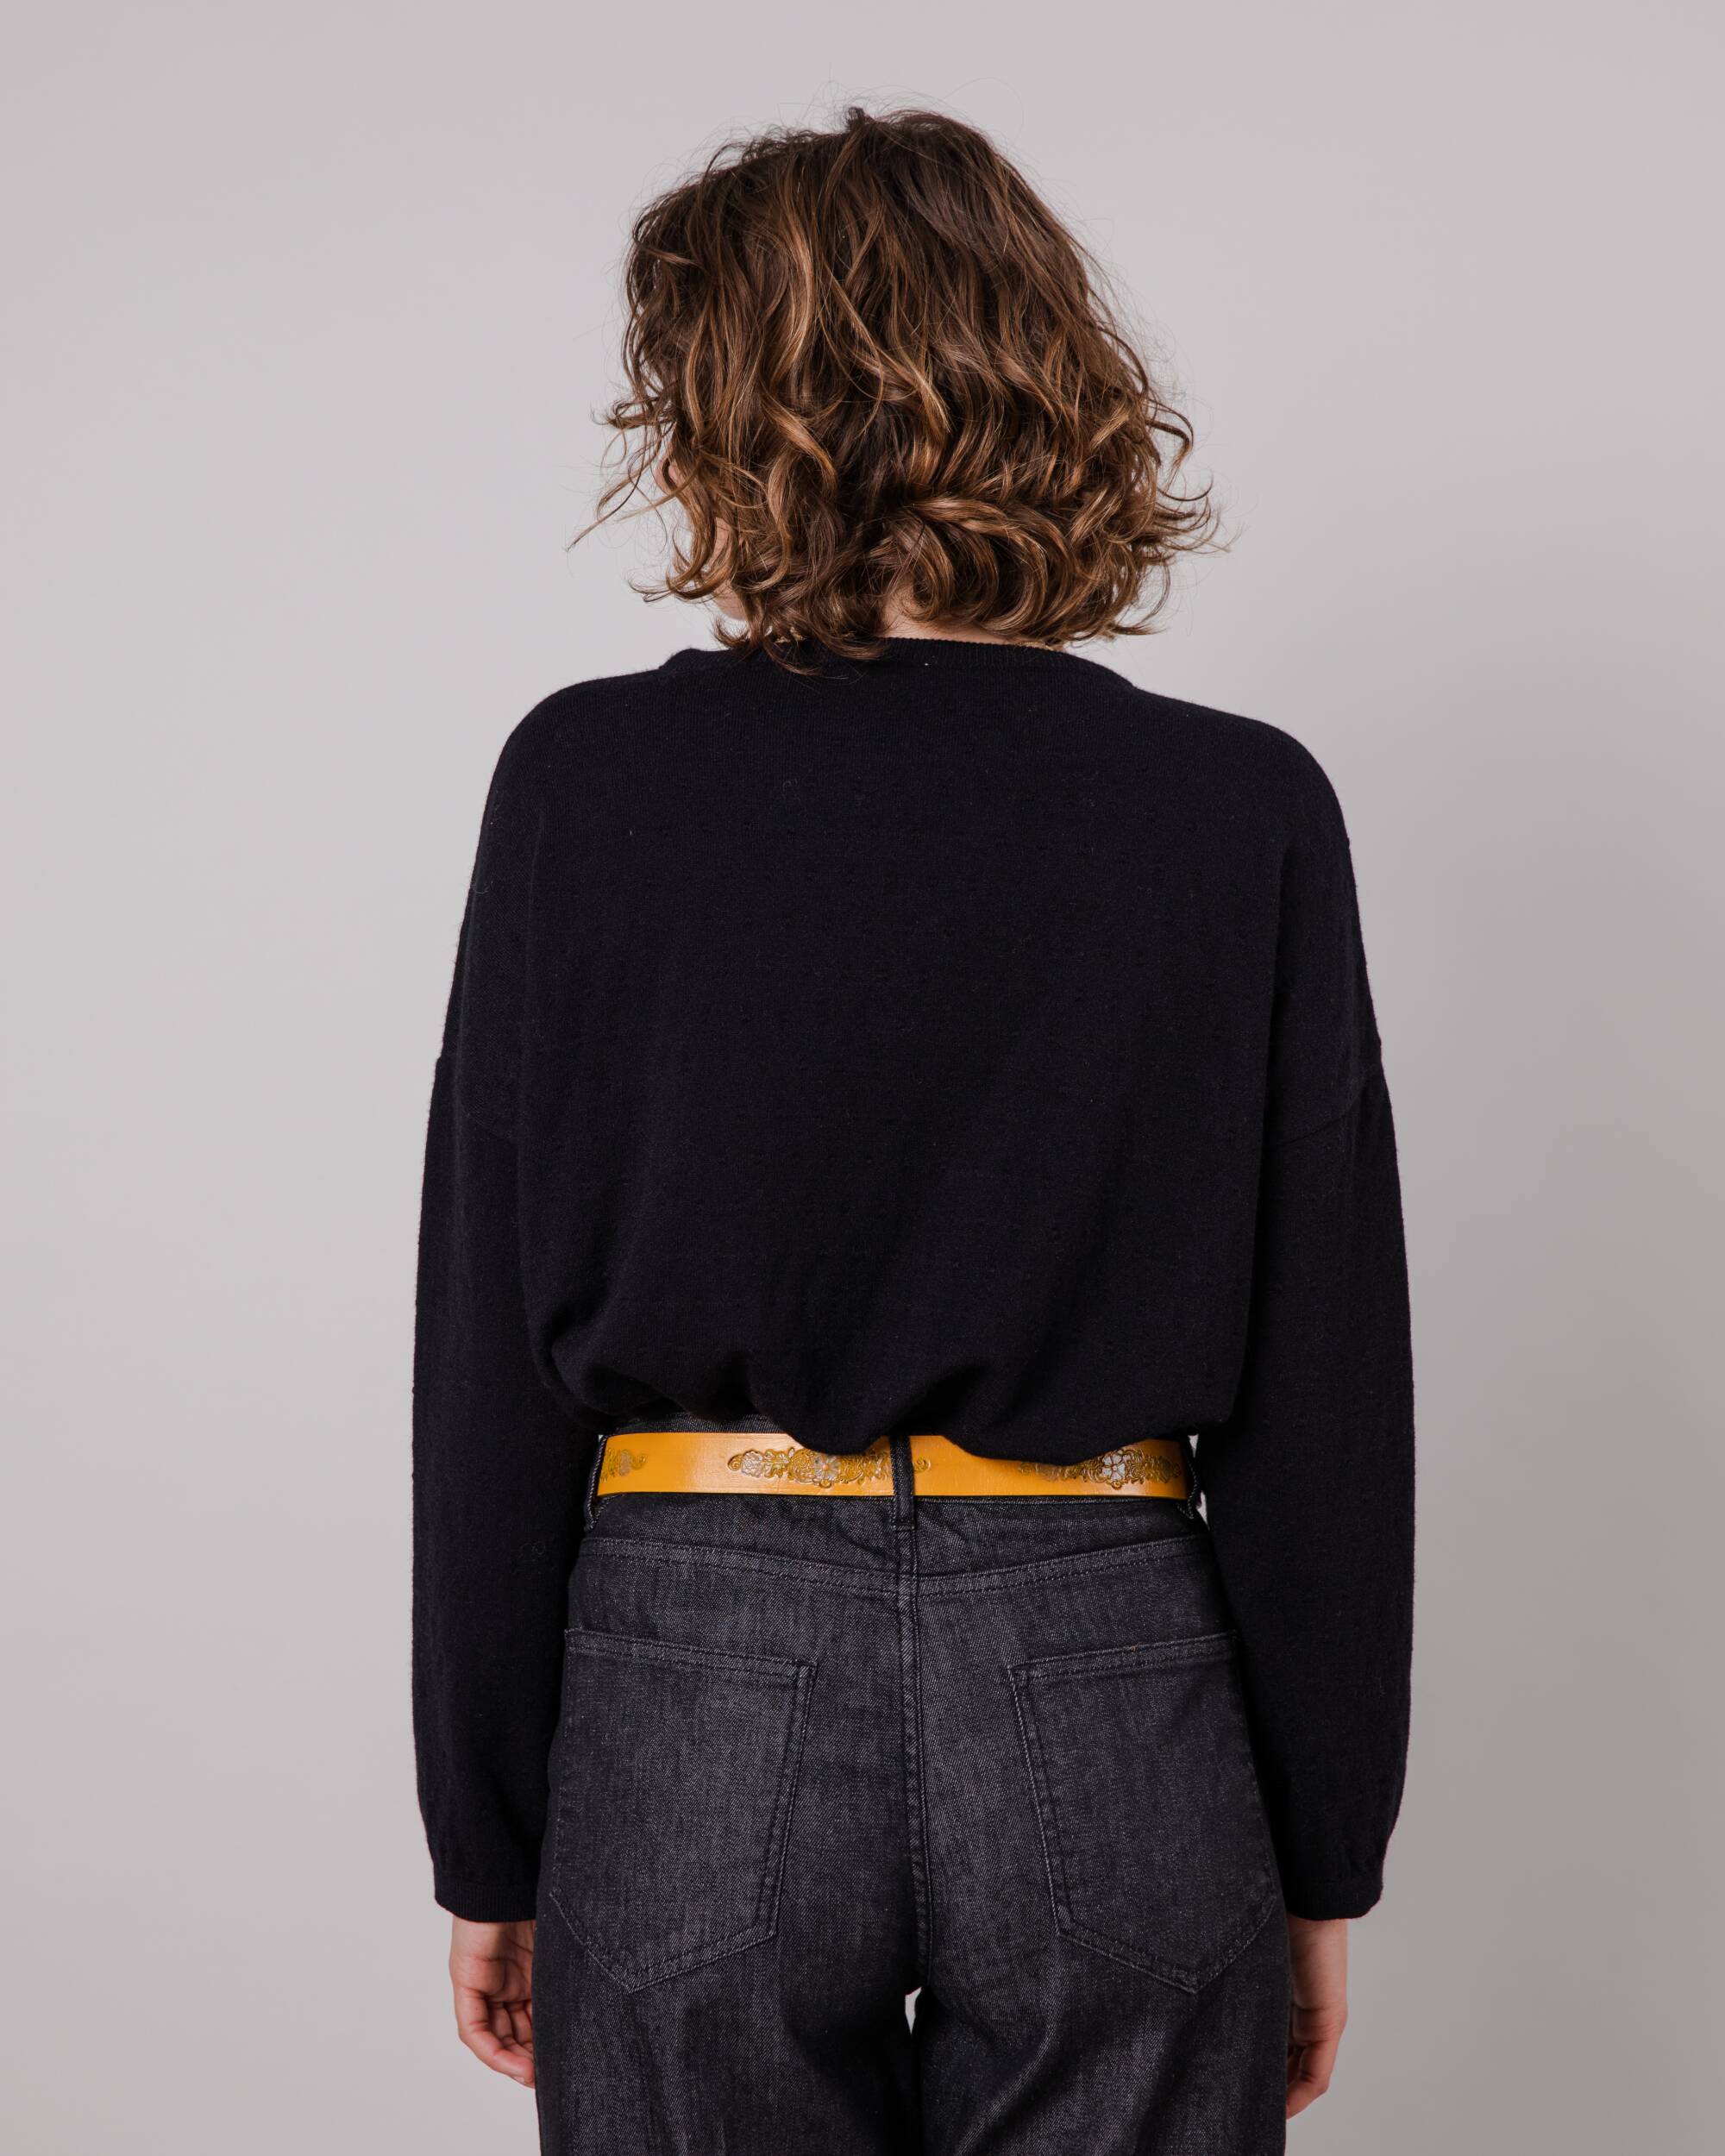 Black sweater made of Livaeco viscose, polyester and polyamide from Brava Fabrics